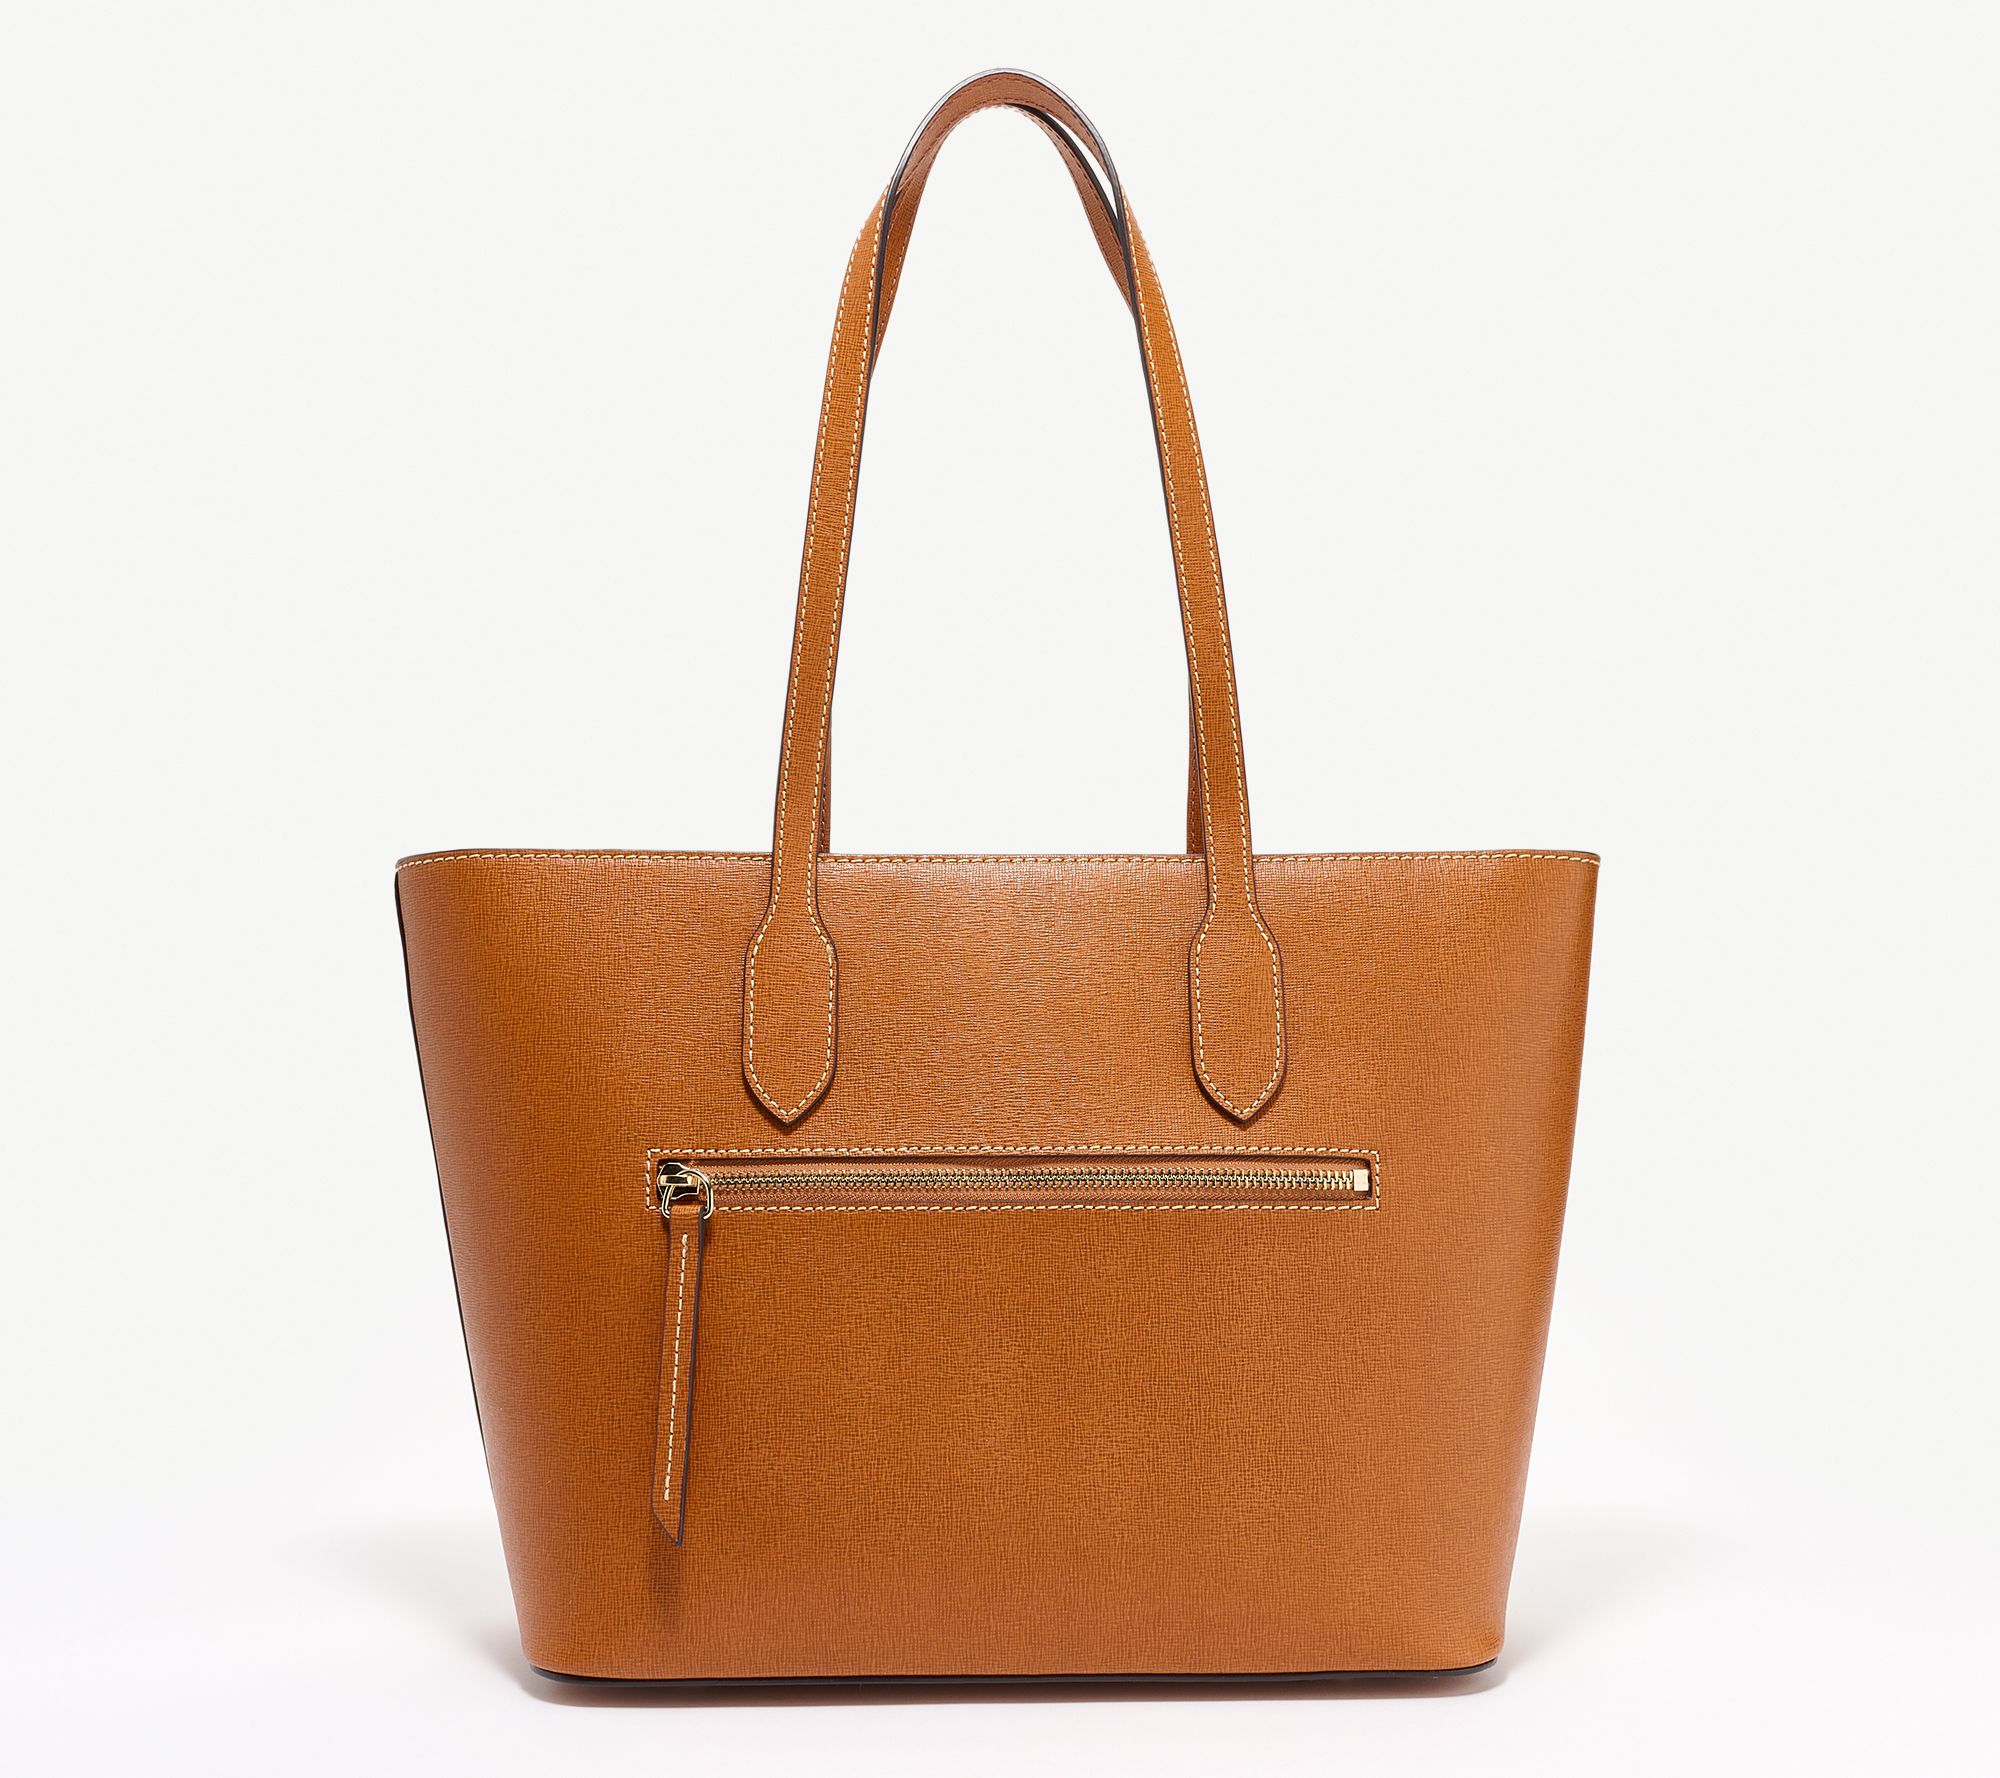 Dooney & Bourke Charleston Saffiano Leather Tote Bag